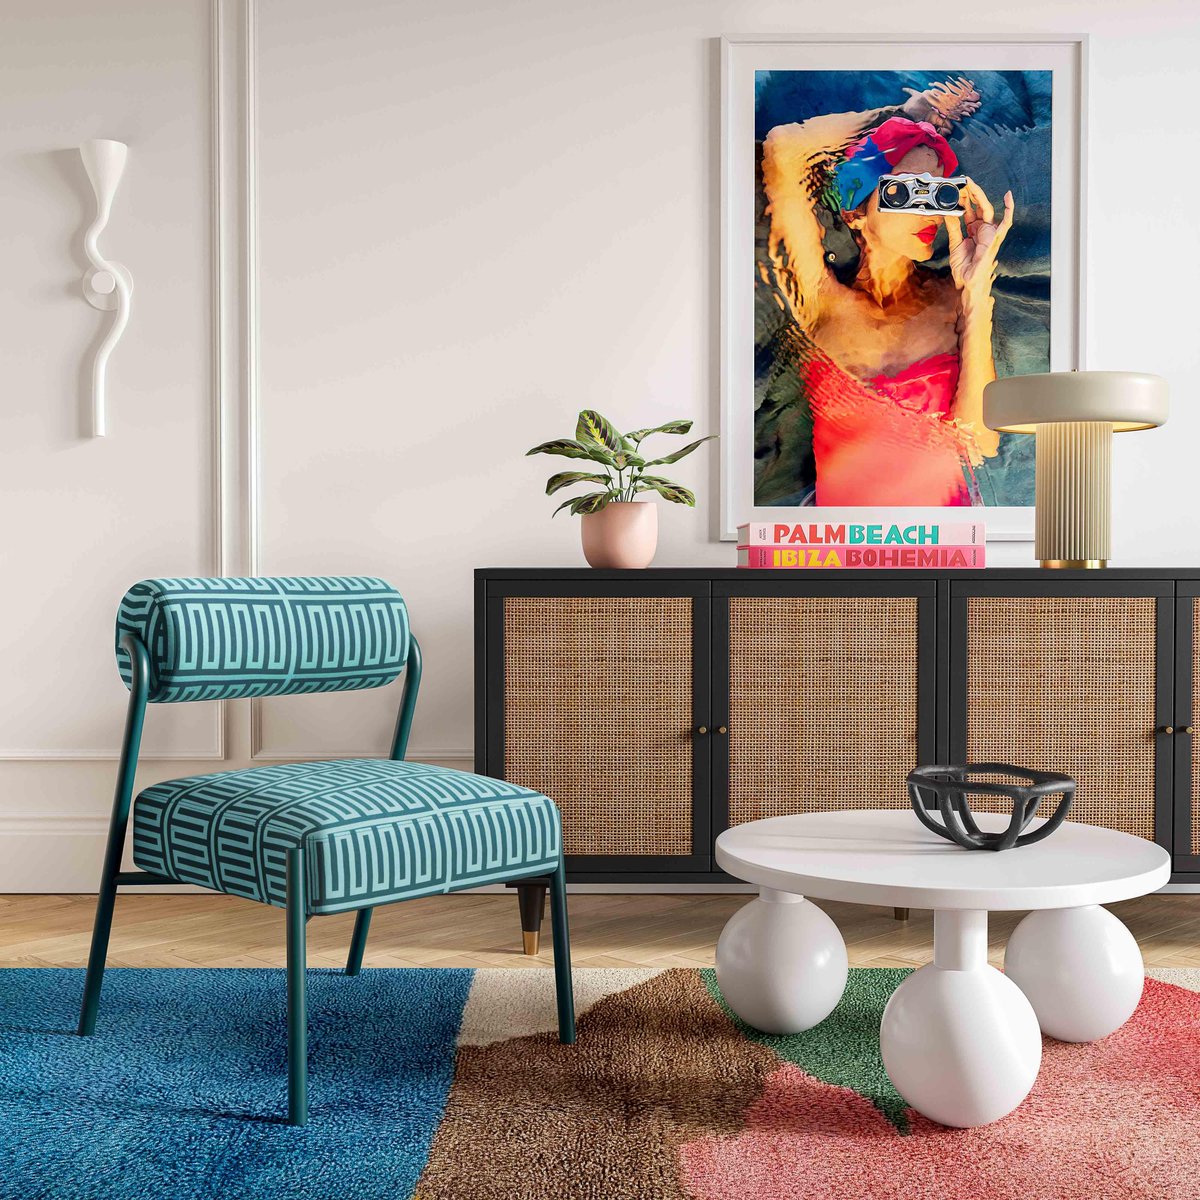 Loving the texture and design of this new accent chair! 🪑💖 👉 tinyurl.com/mr2e7b87
.
#HomeDecor #InteriorDesign #TealLove #HomeSweetHome #DecorDetails #interiordesign #interiorinspo #homeinspiration #livingroominspo #inspohome #cozyhome #interiordecor #livingroomdecor